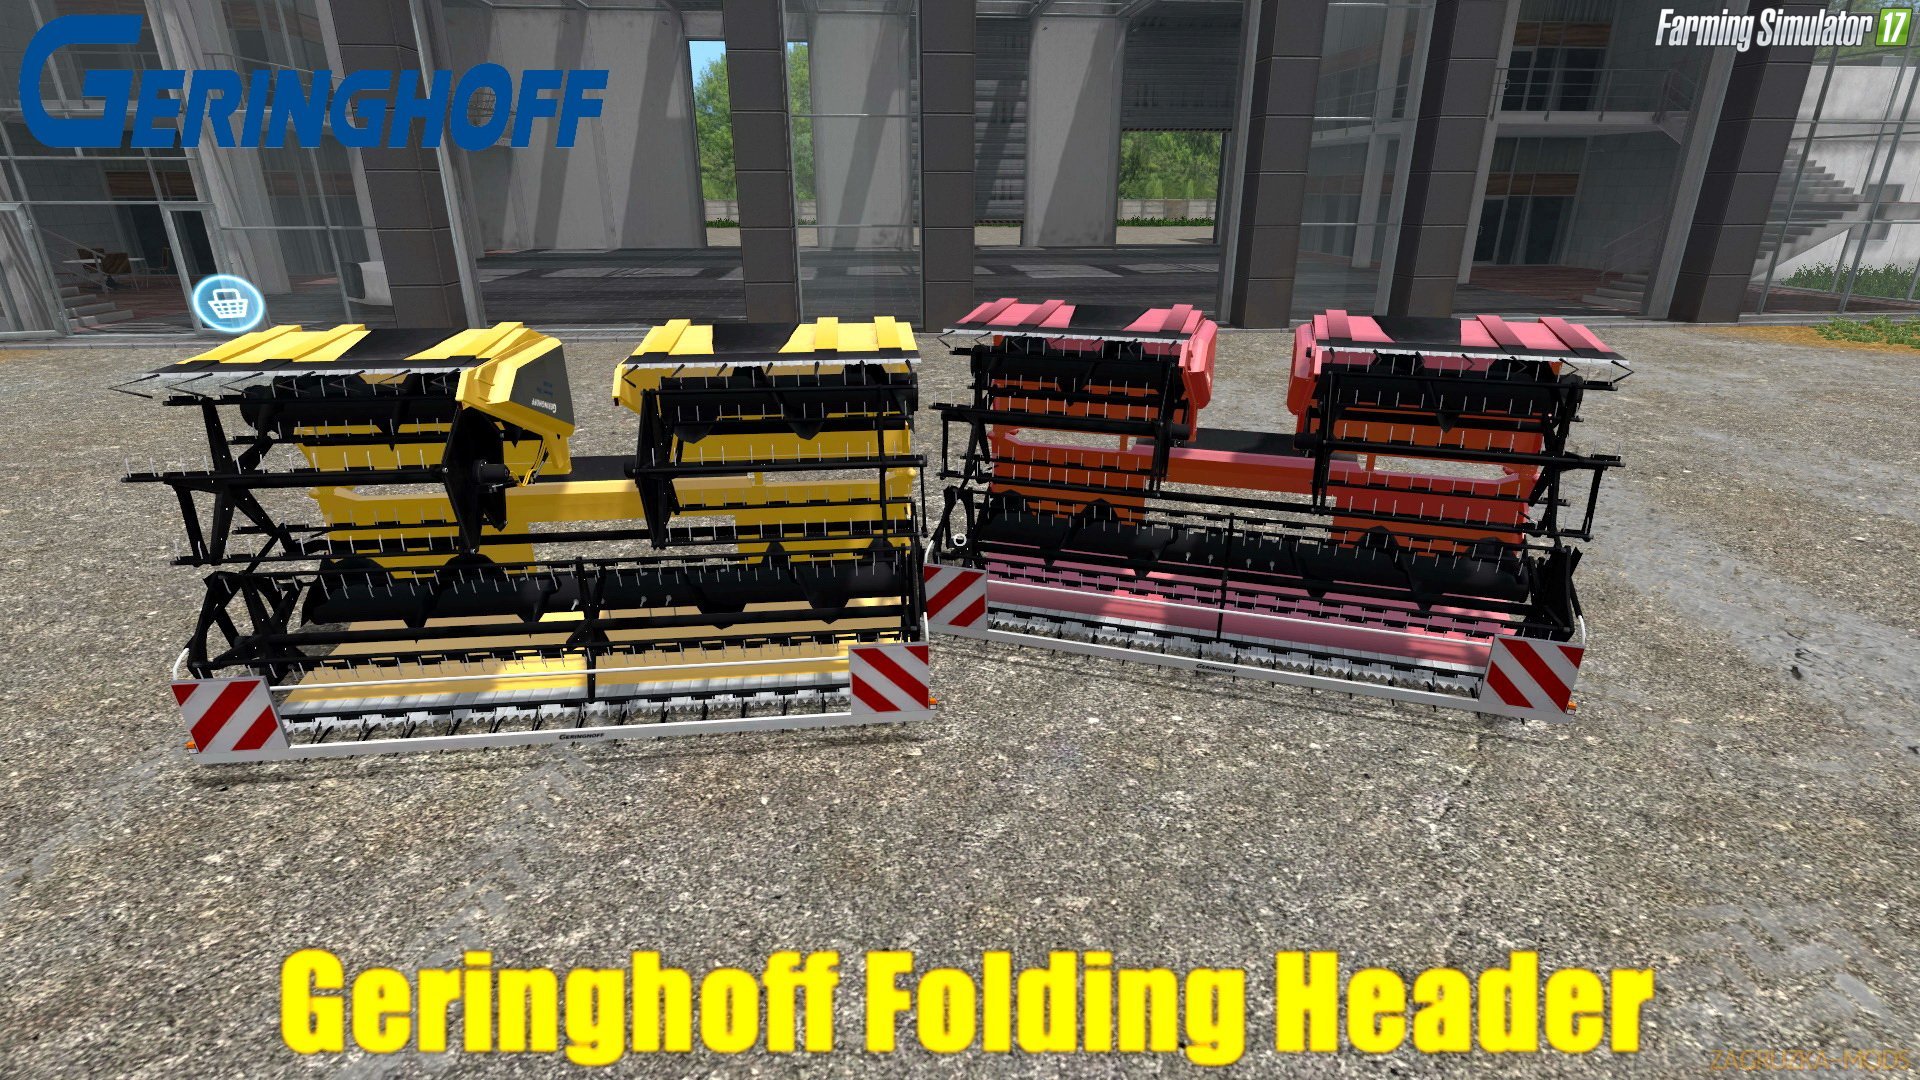 Geringhoff Folding Header v1.0 for FS 17